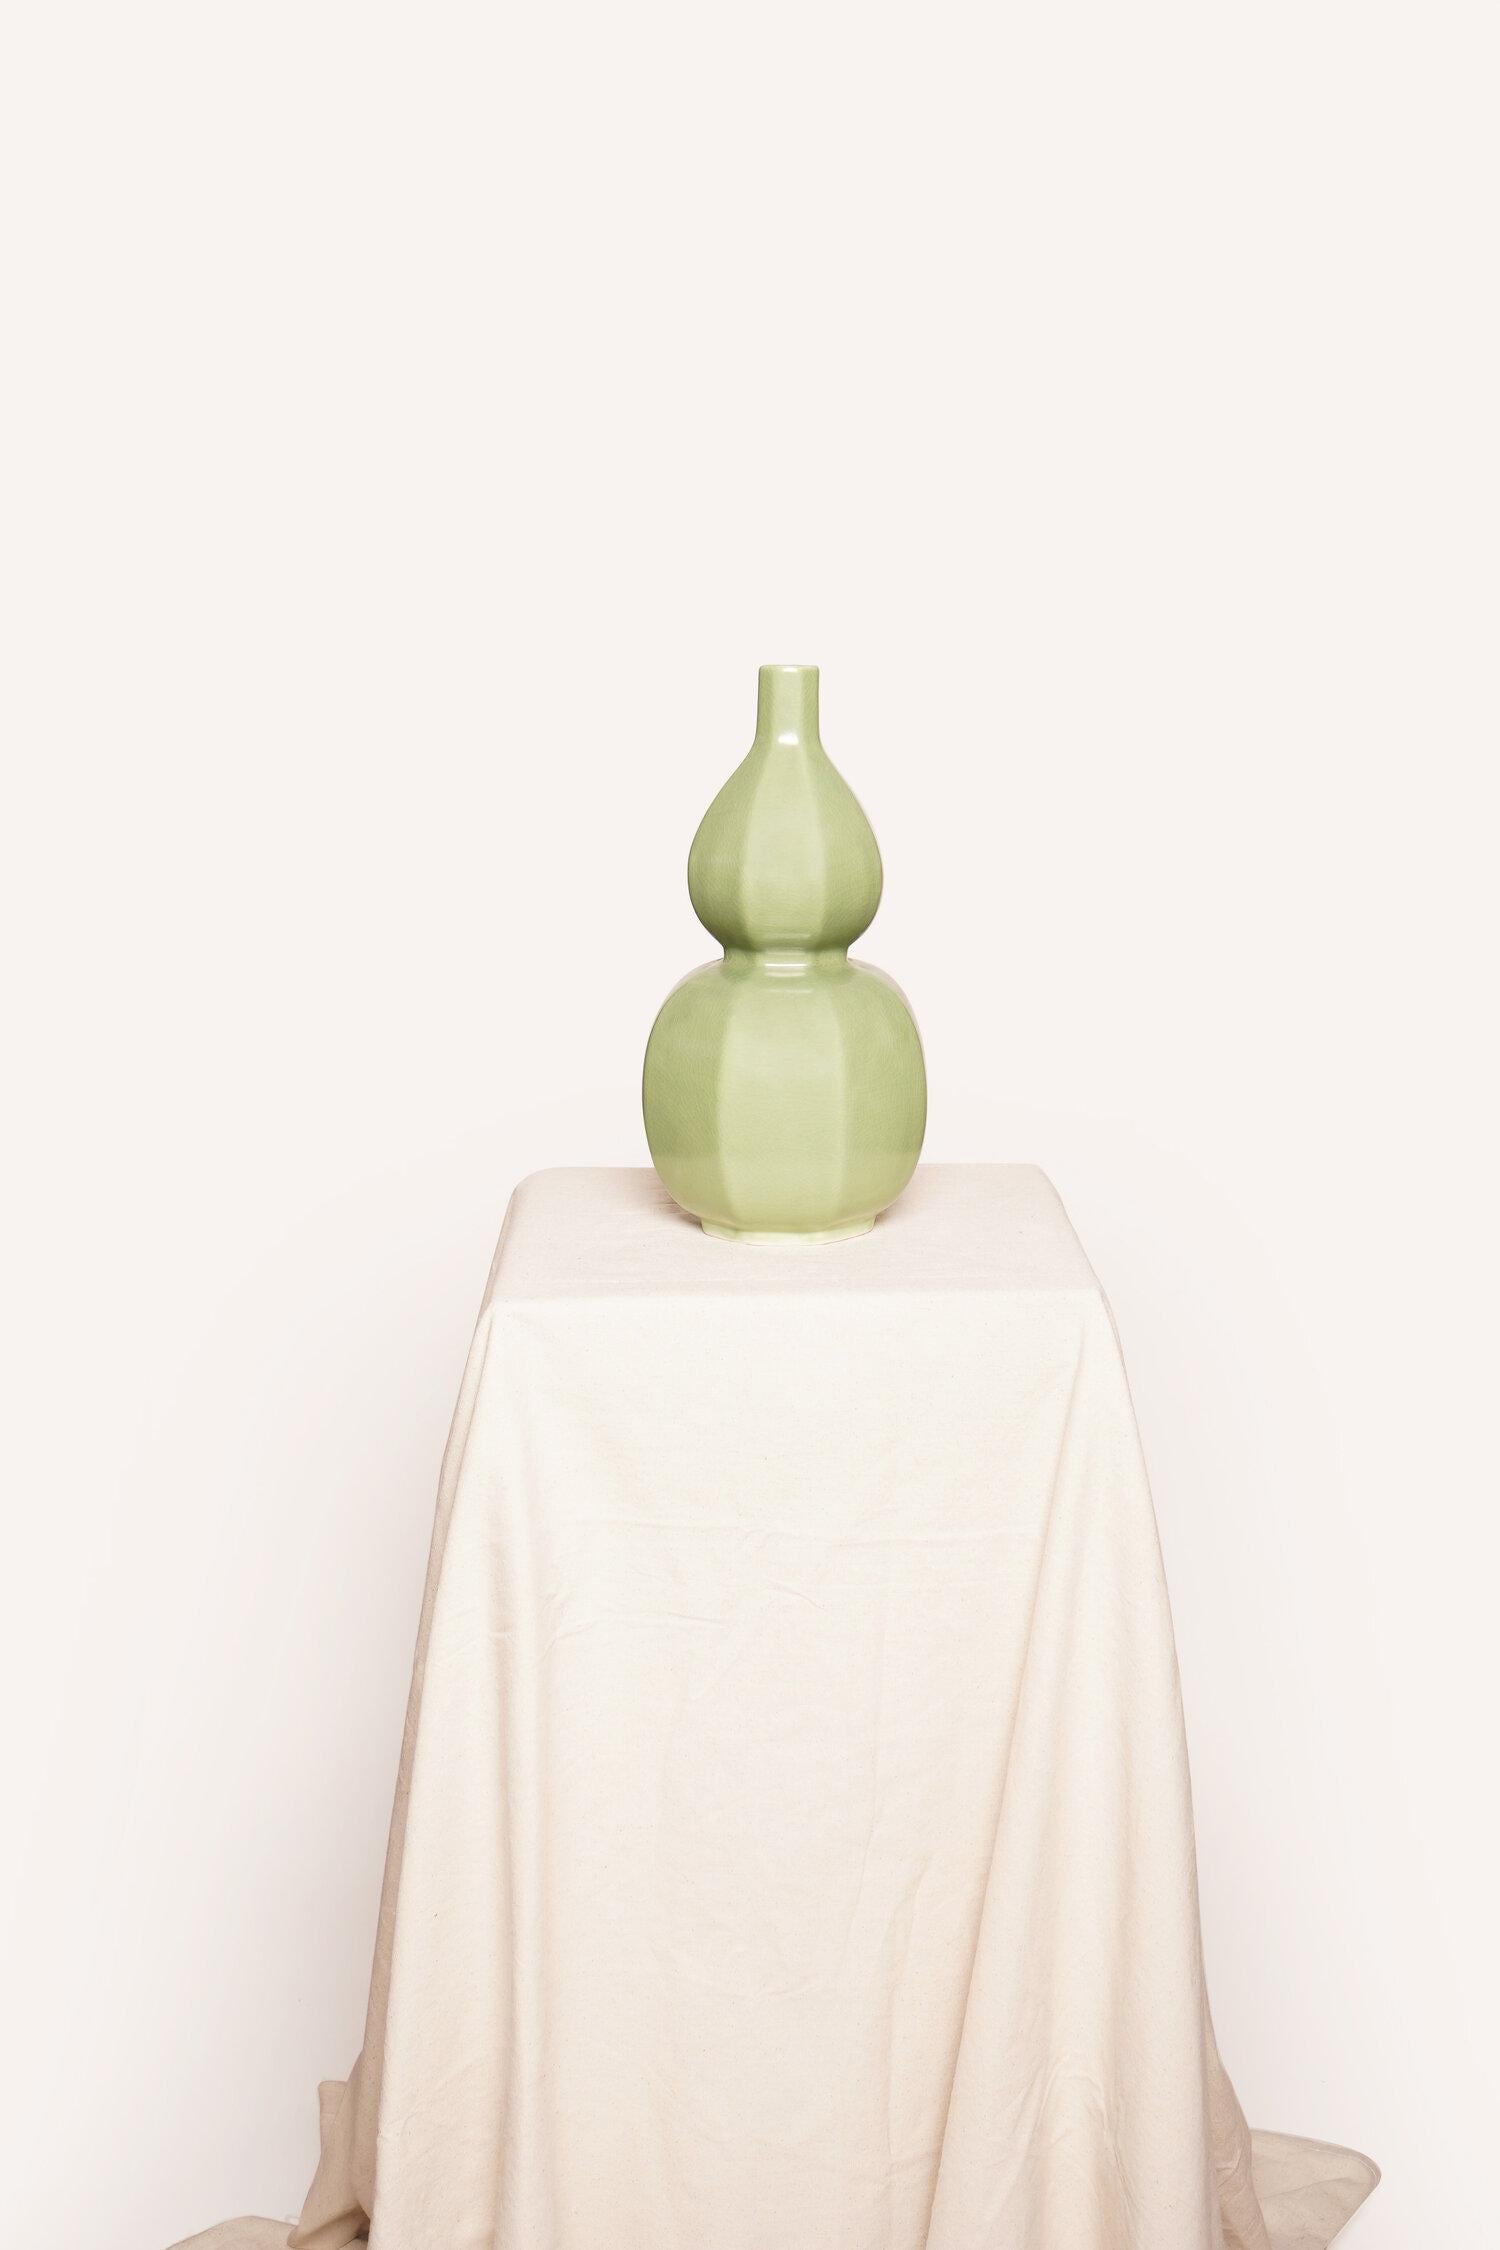 20th Century Green Glazed Vase #1 For Sale